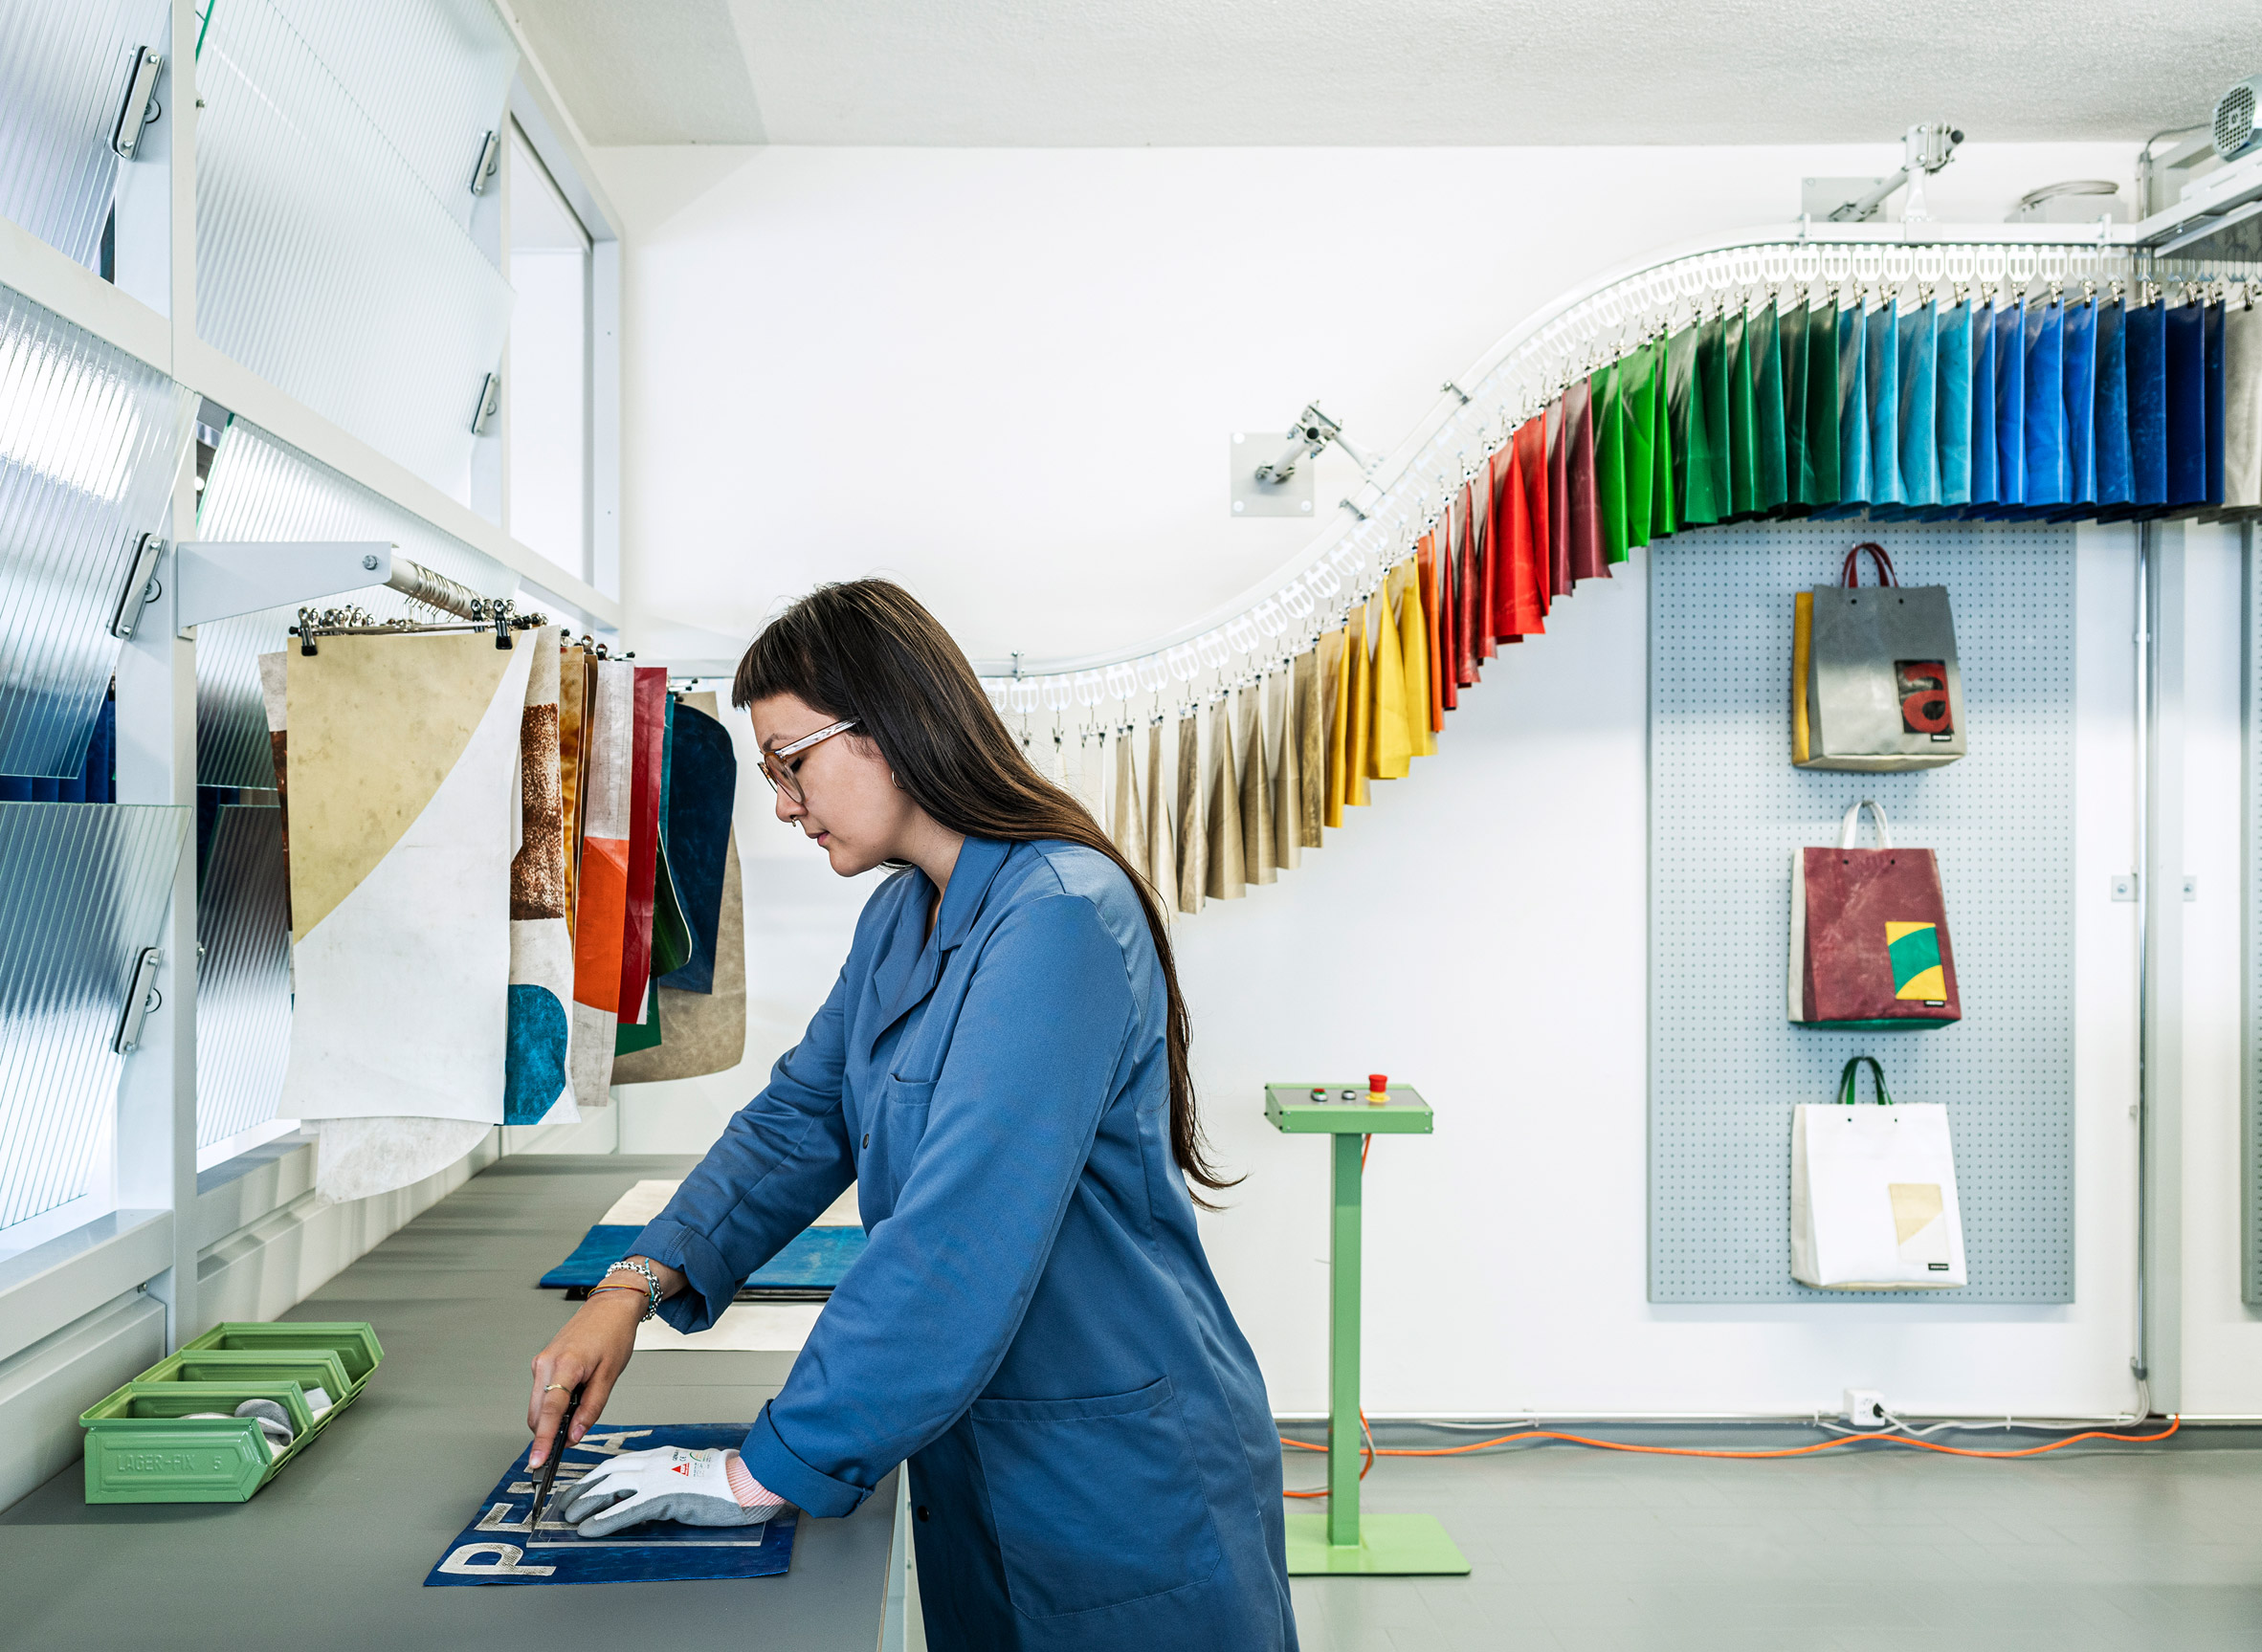 Conveyor belt of Sweat-Yourself-Shop by Freitag